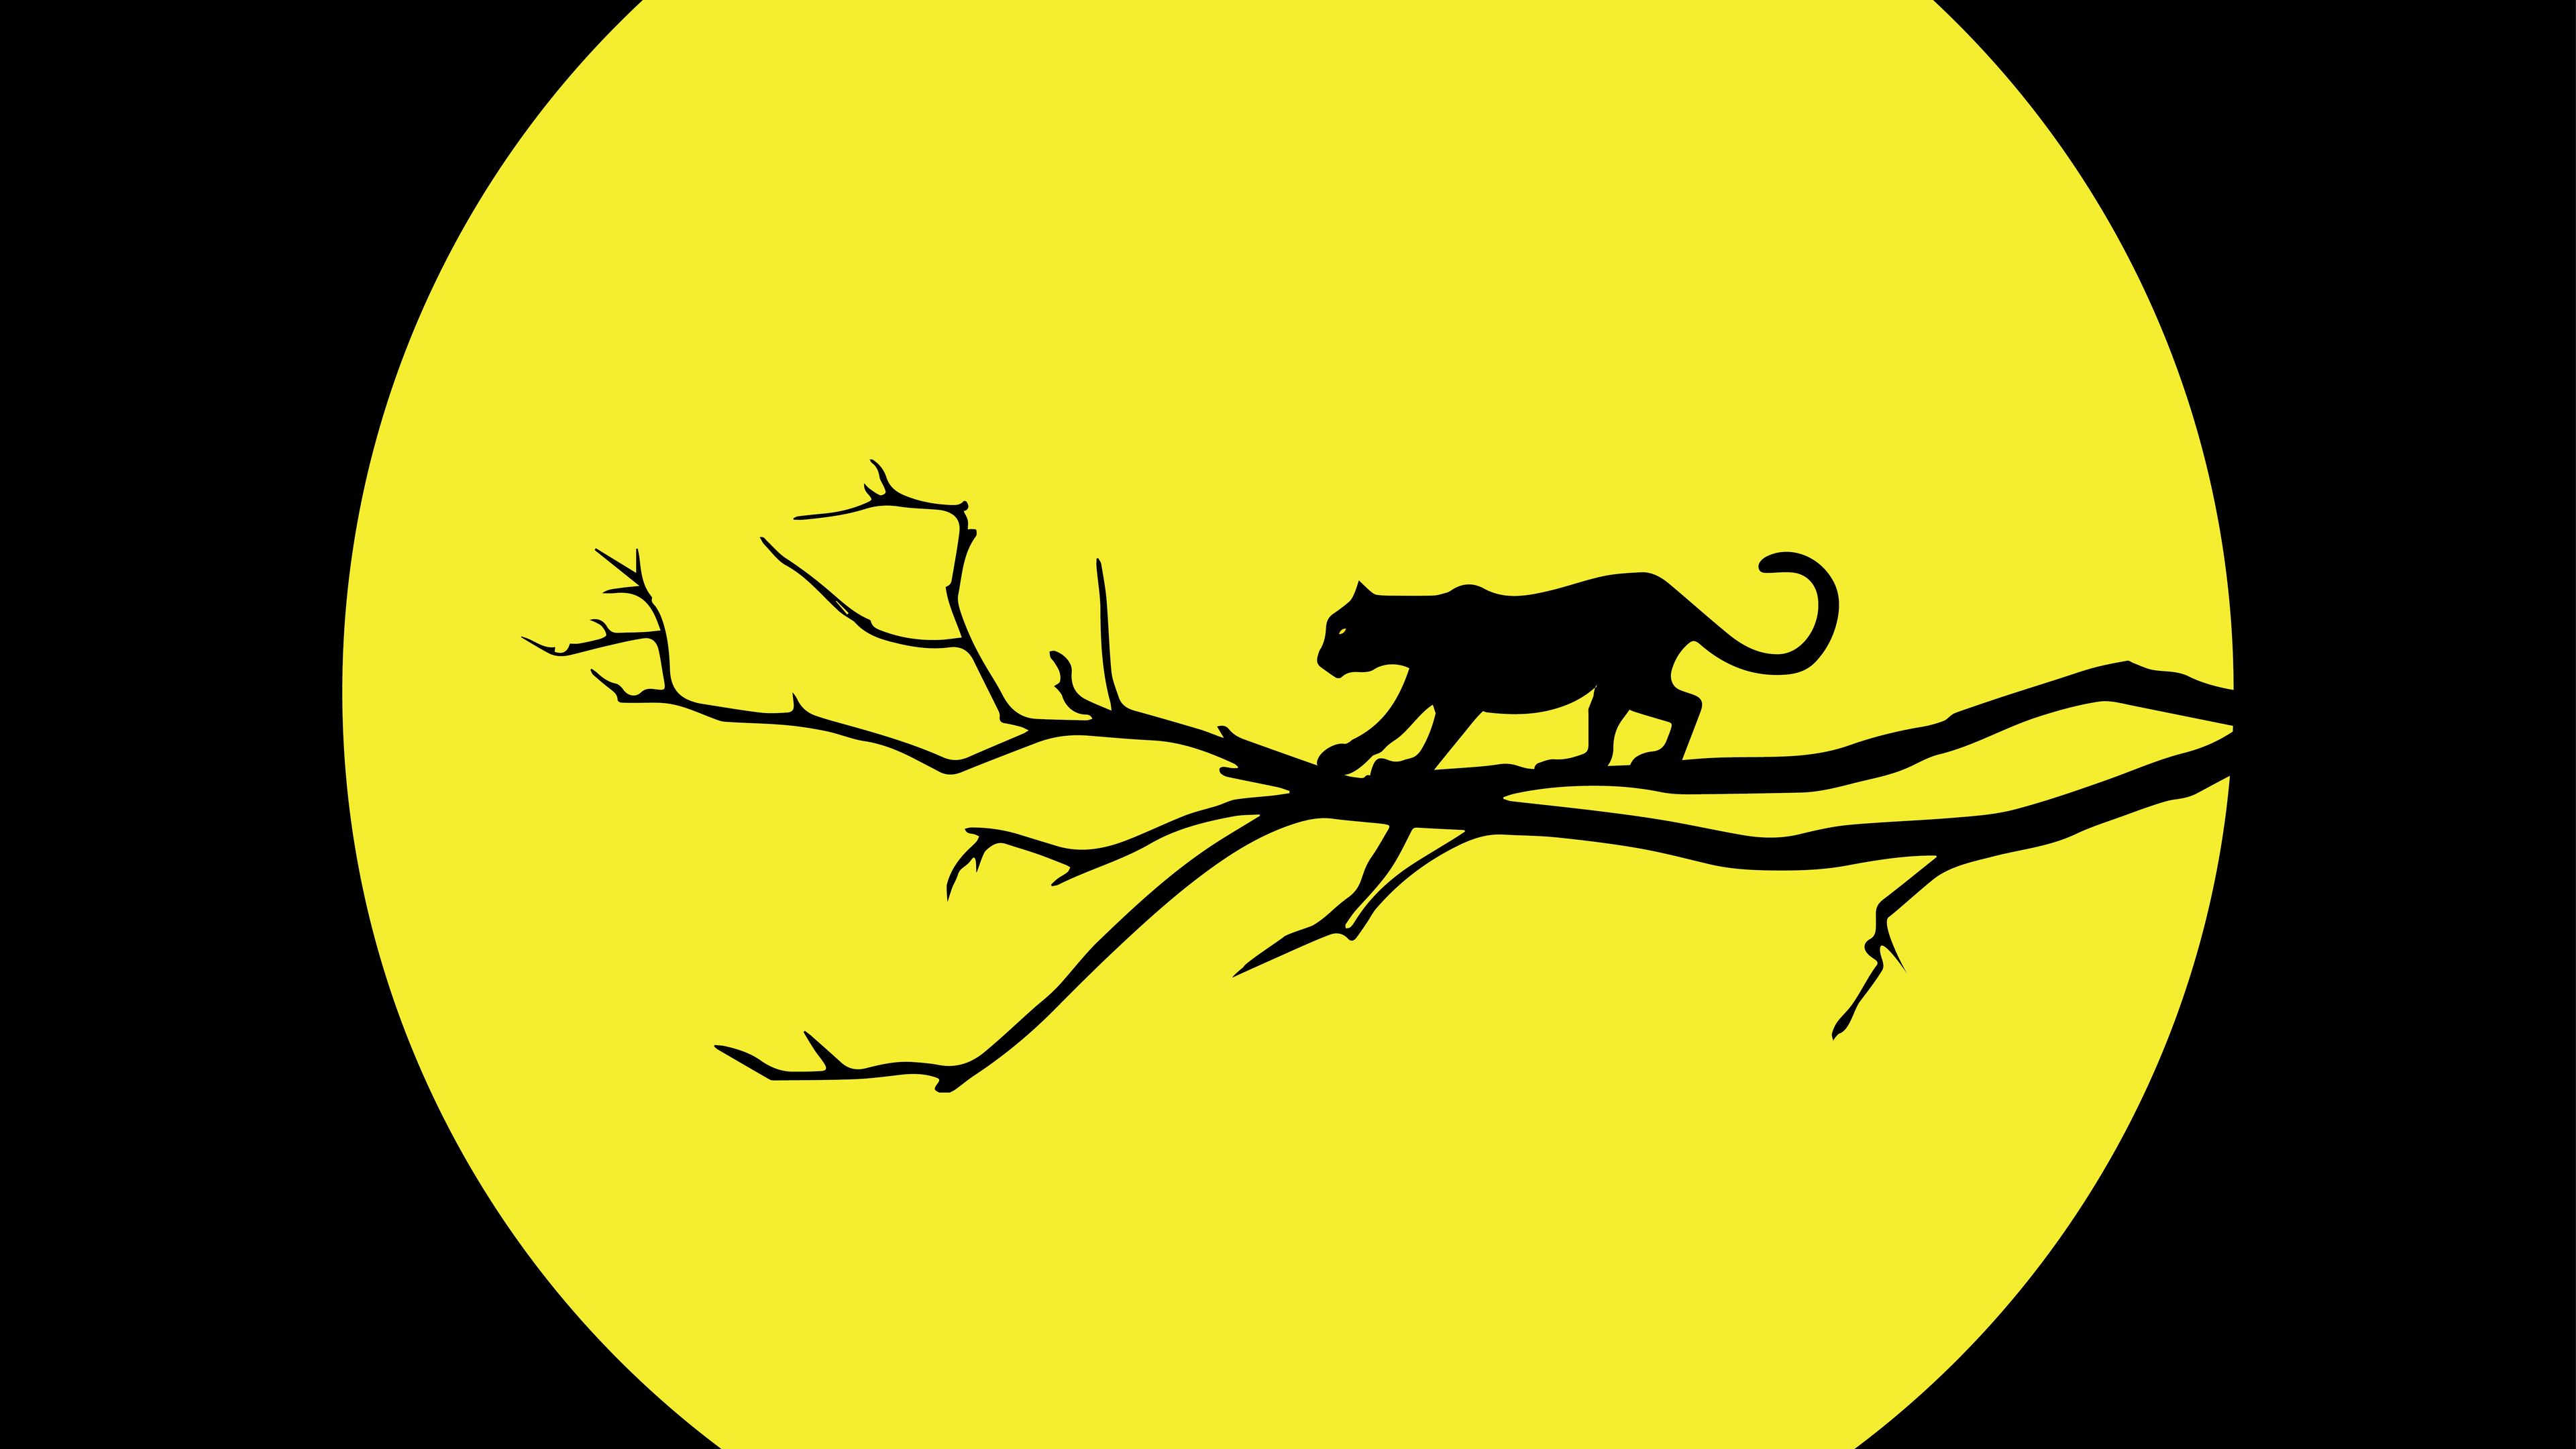 Download wallpaper 3840x2160 cougar, jaguar, minimalism, vector, black, yellow 4k uhd 16:9 HD background